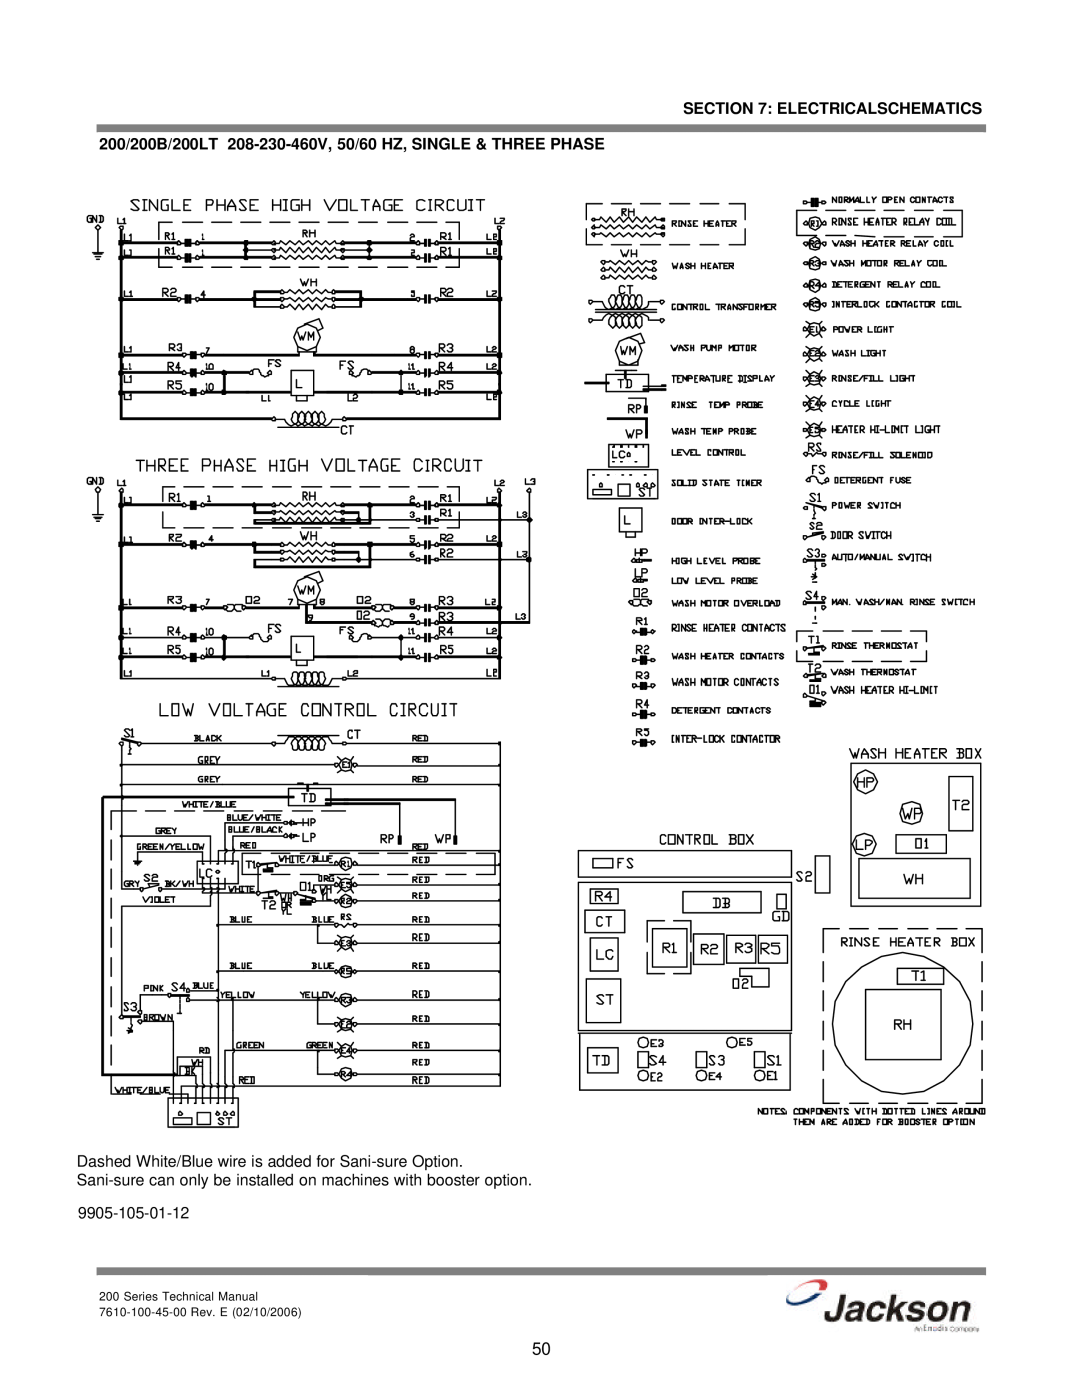 Jackson 200S Electricalschematics, 200/200B/200LT 208-230-460V, 50/60 HZ, SINGLE & THREE PHASE, 9905-105-01-12 